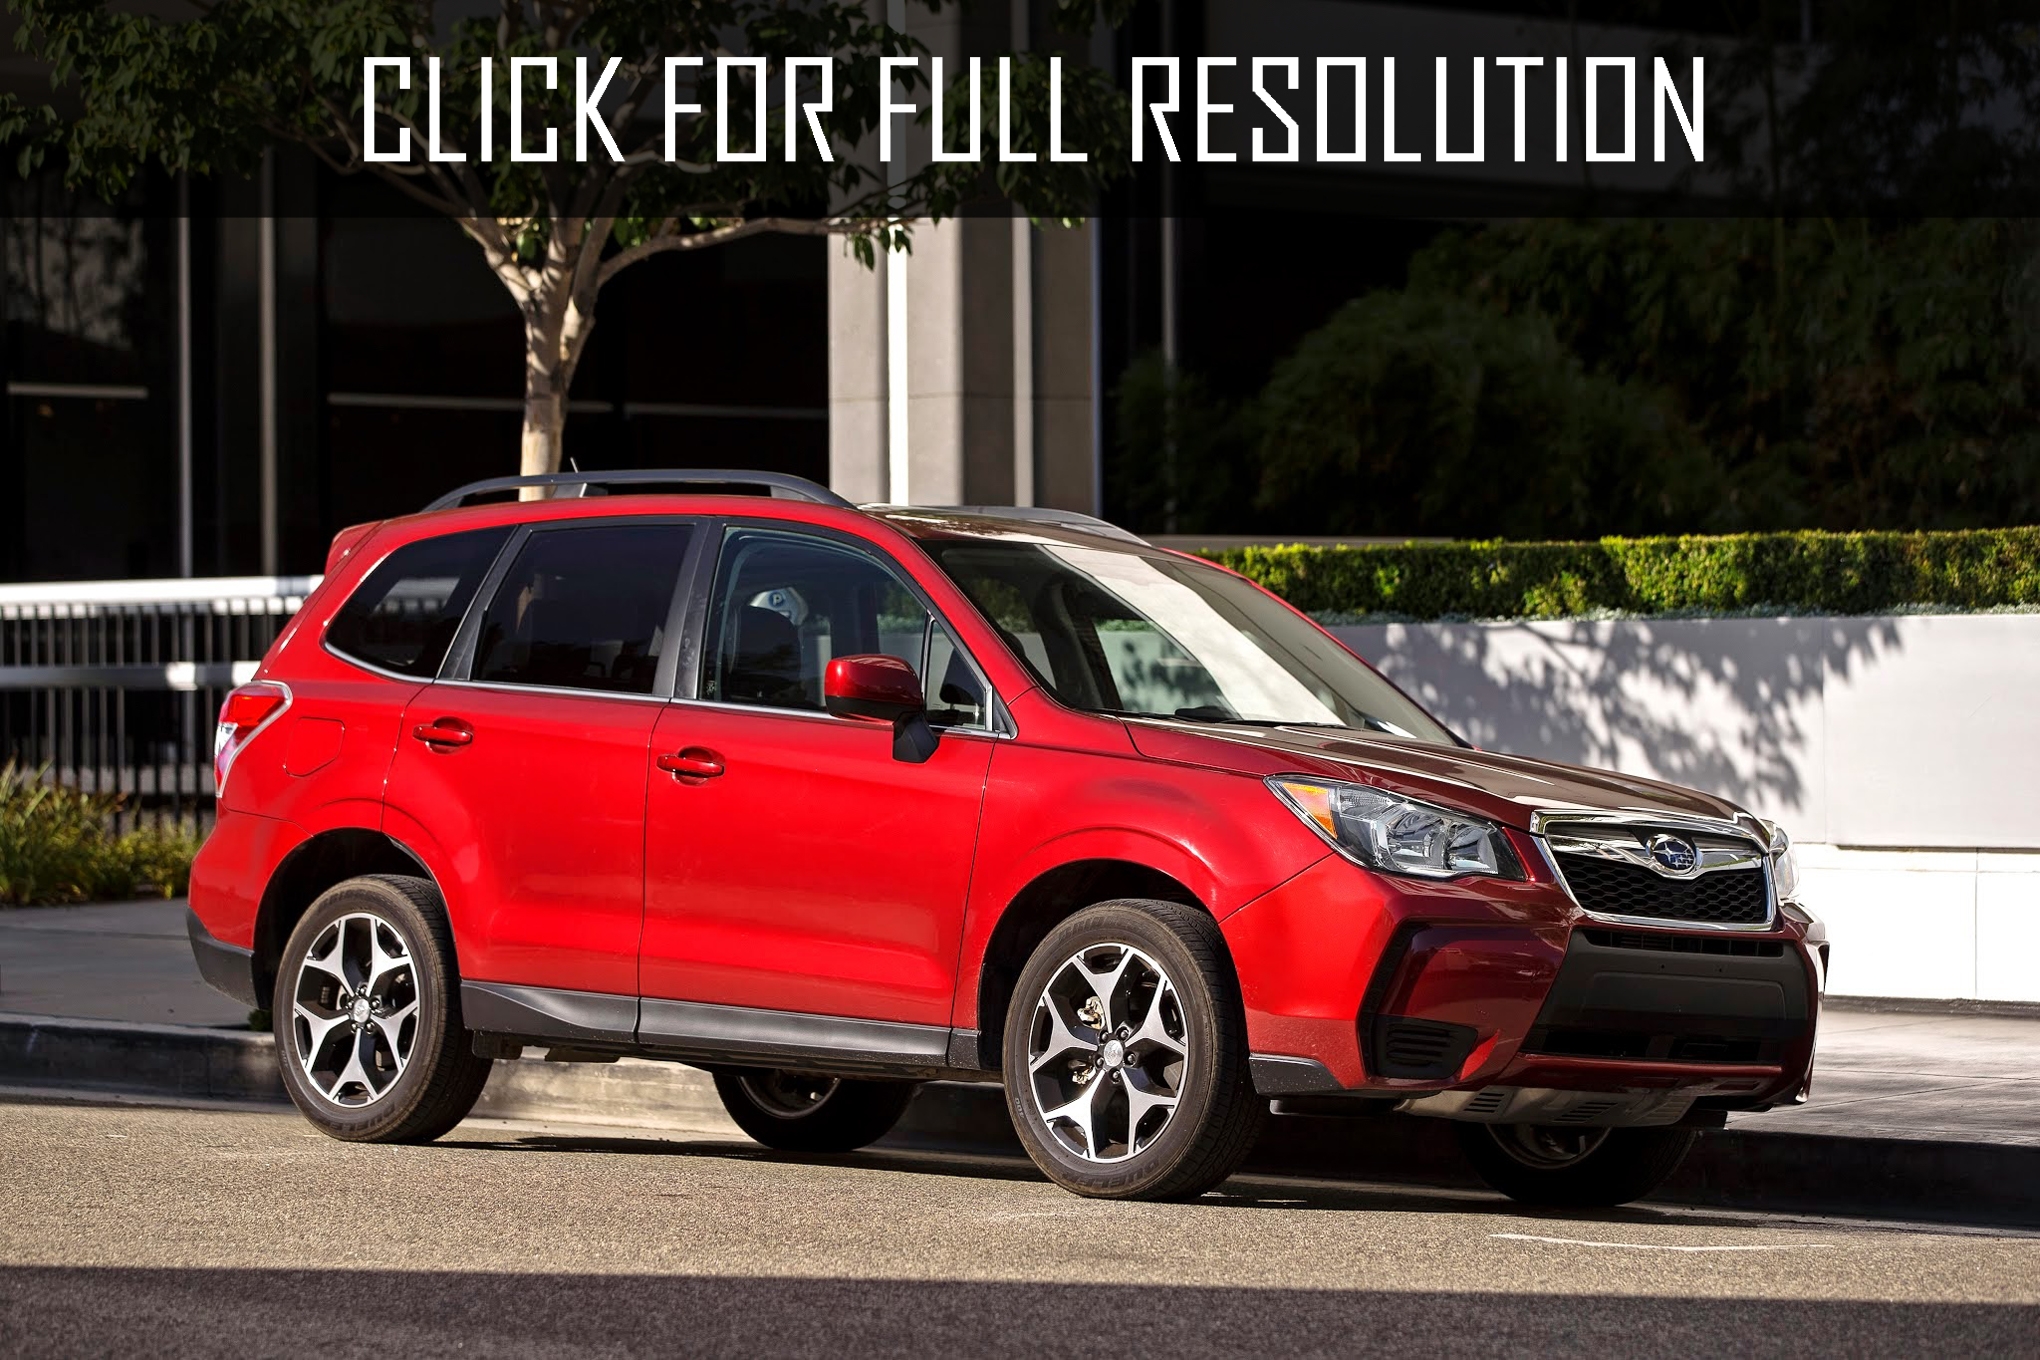 2014 Subaru Forester Turbo news, reviews, msrp, ratings